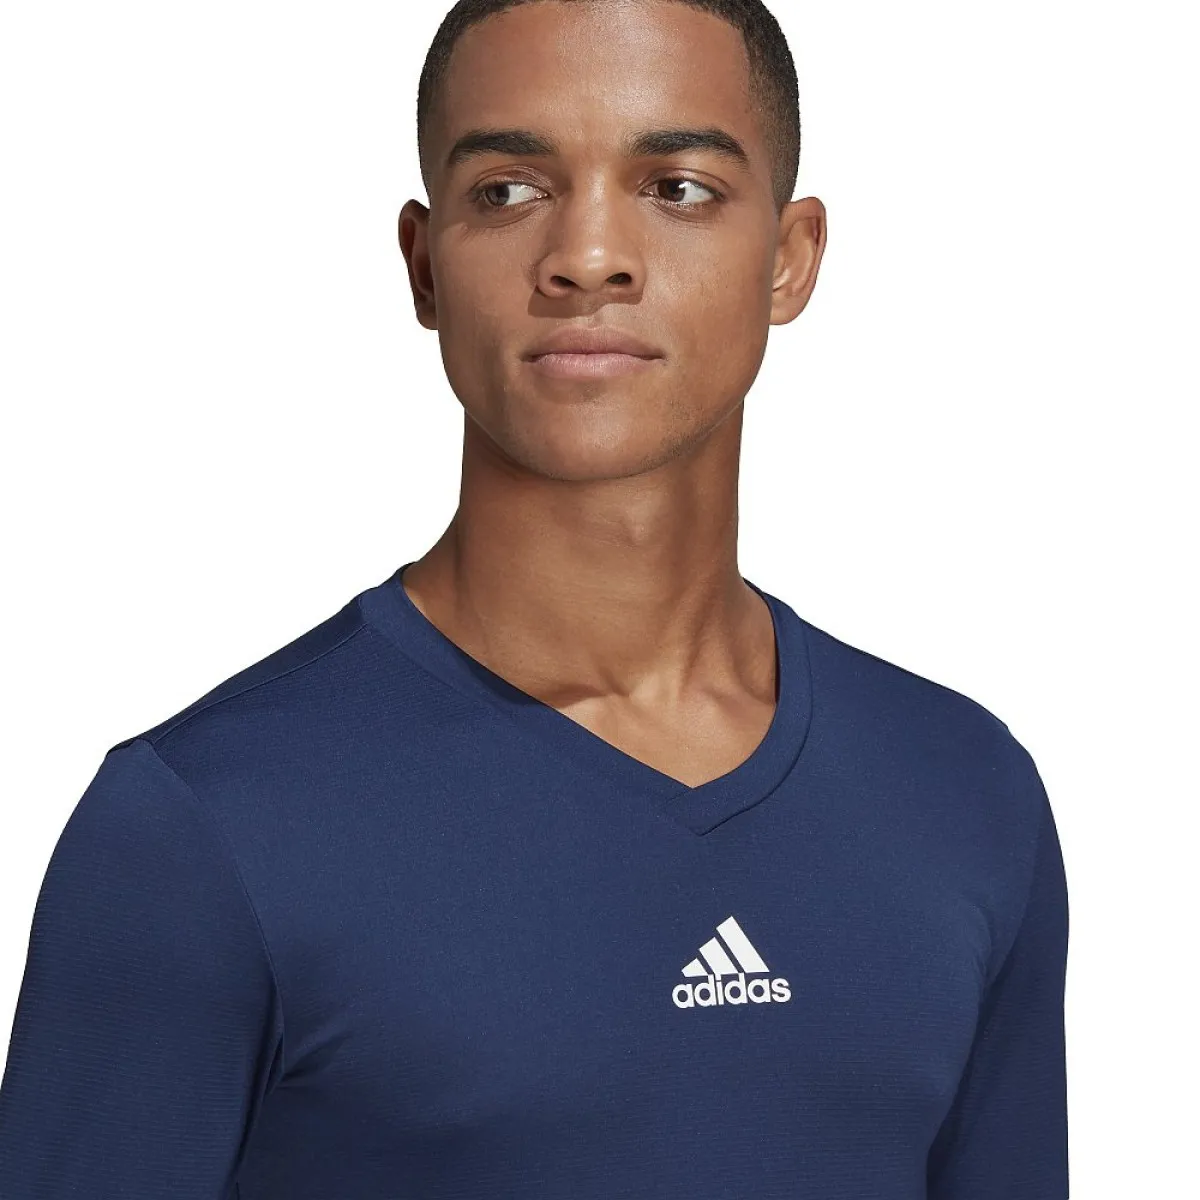 adidas T-Shirt langarm Team Base navy blau 13-ADIGN5675